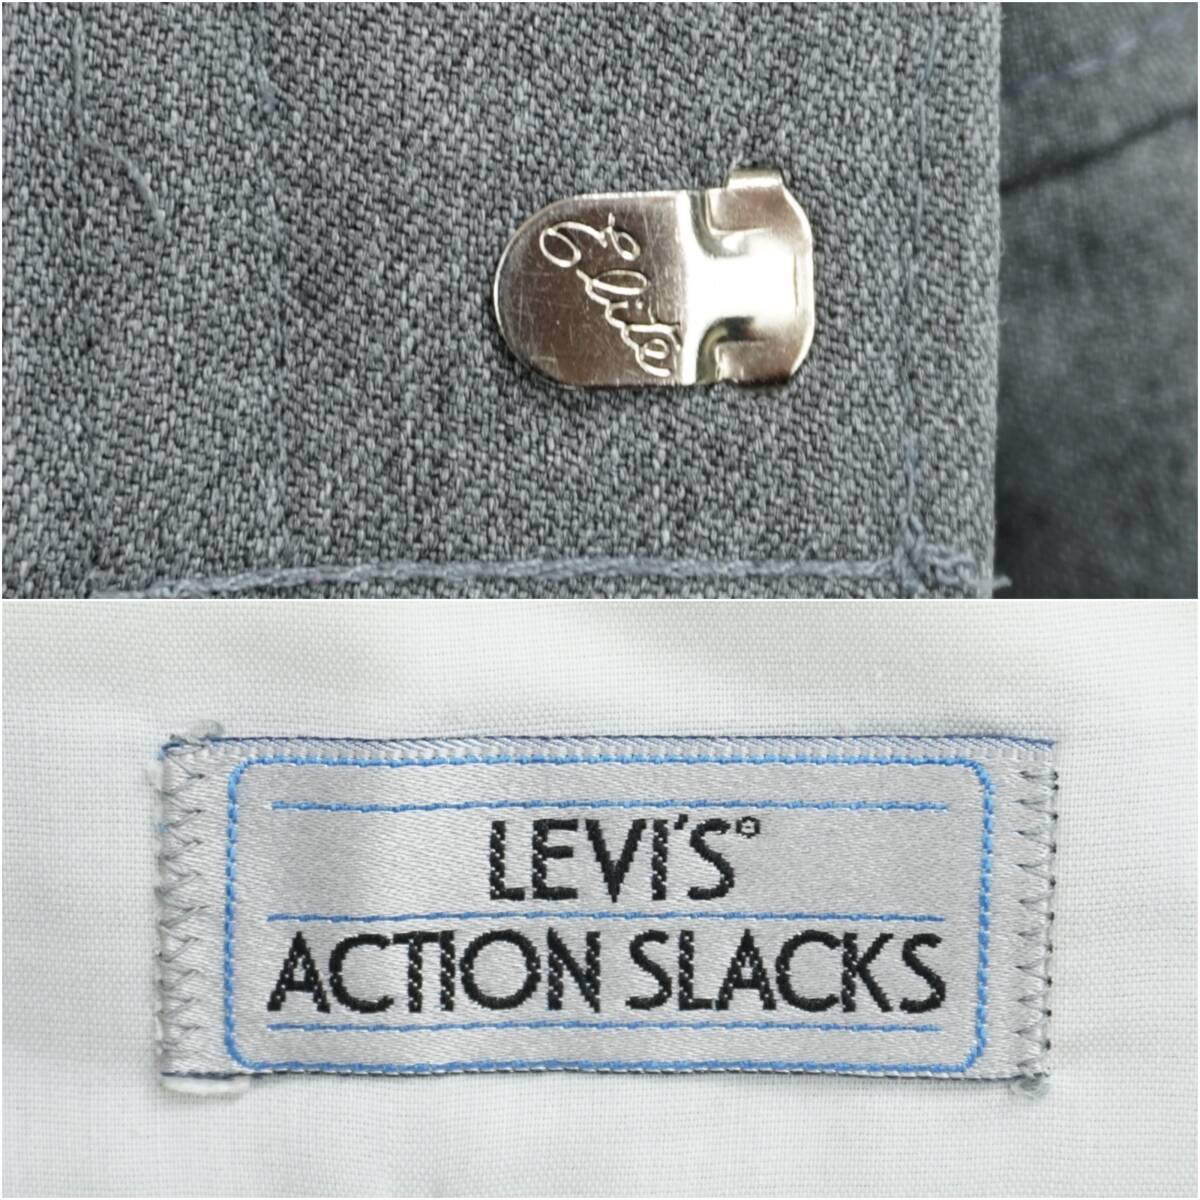 Levi's ACTION SLACKS GRAY 1990s W33.5 L33.5 LS24029 リーバイス アクションスラックス スラックス 1990年代 アメリカ製 グレー_画像10